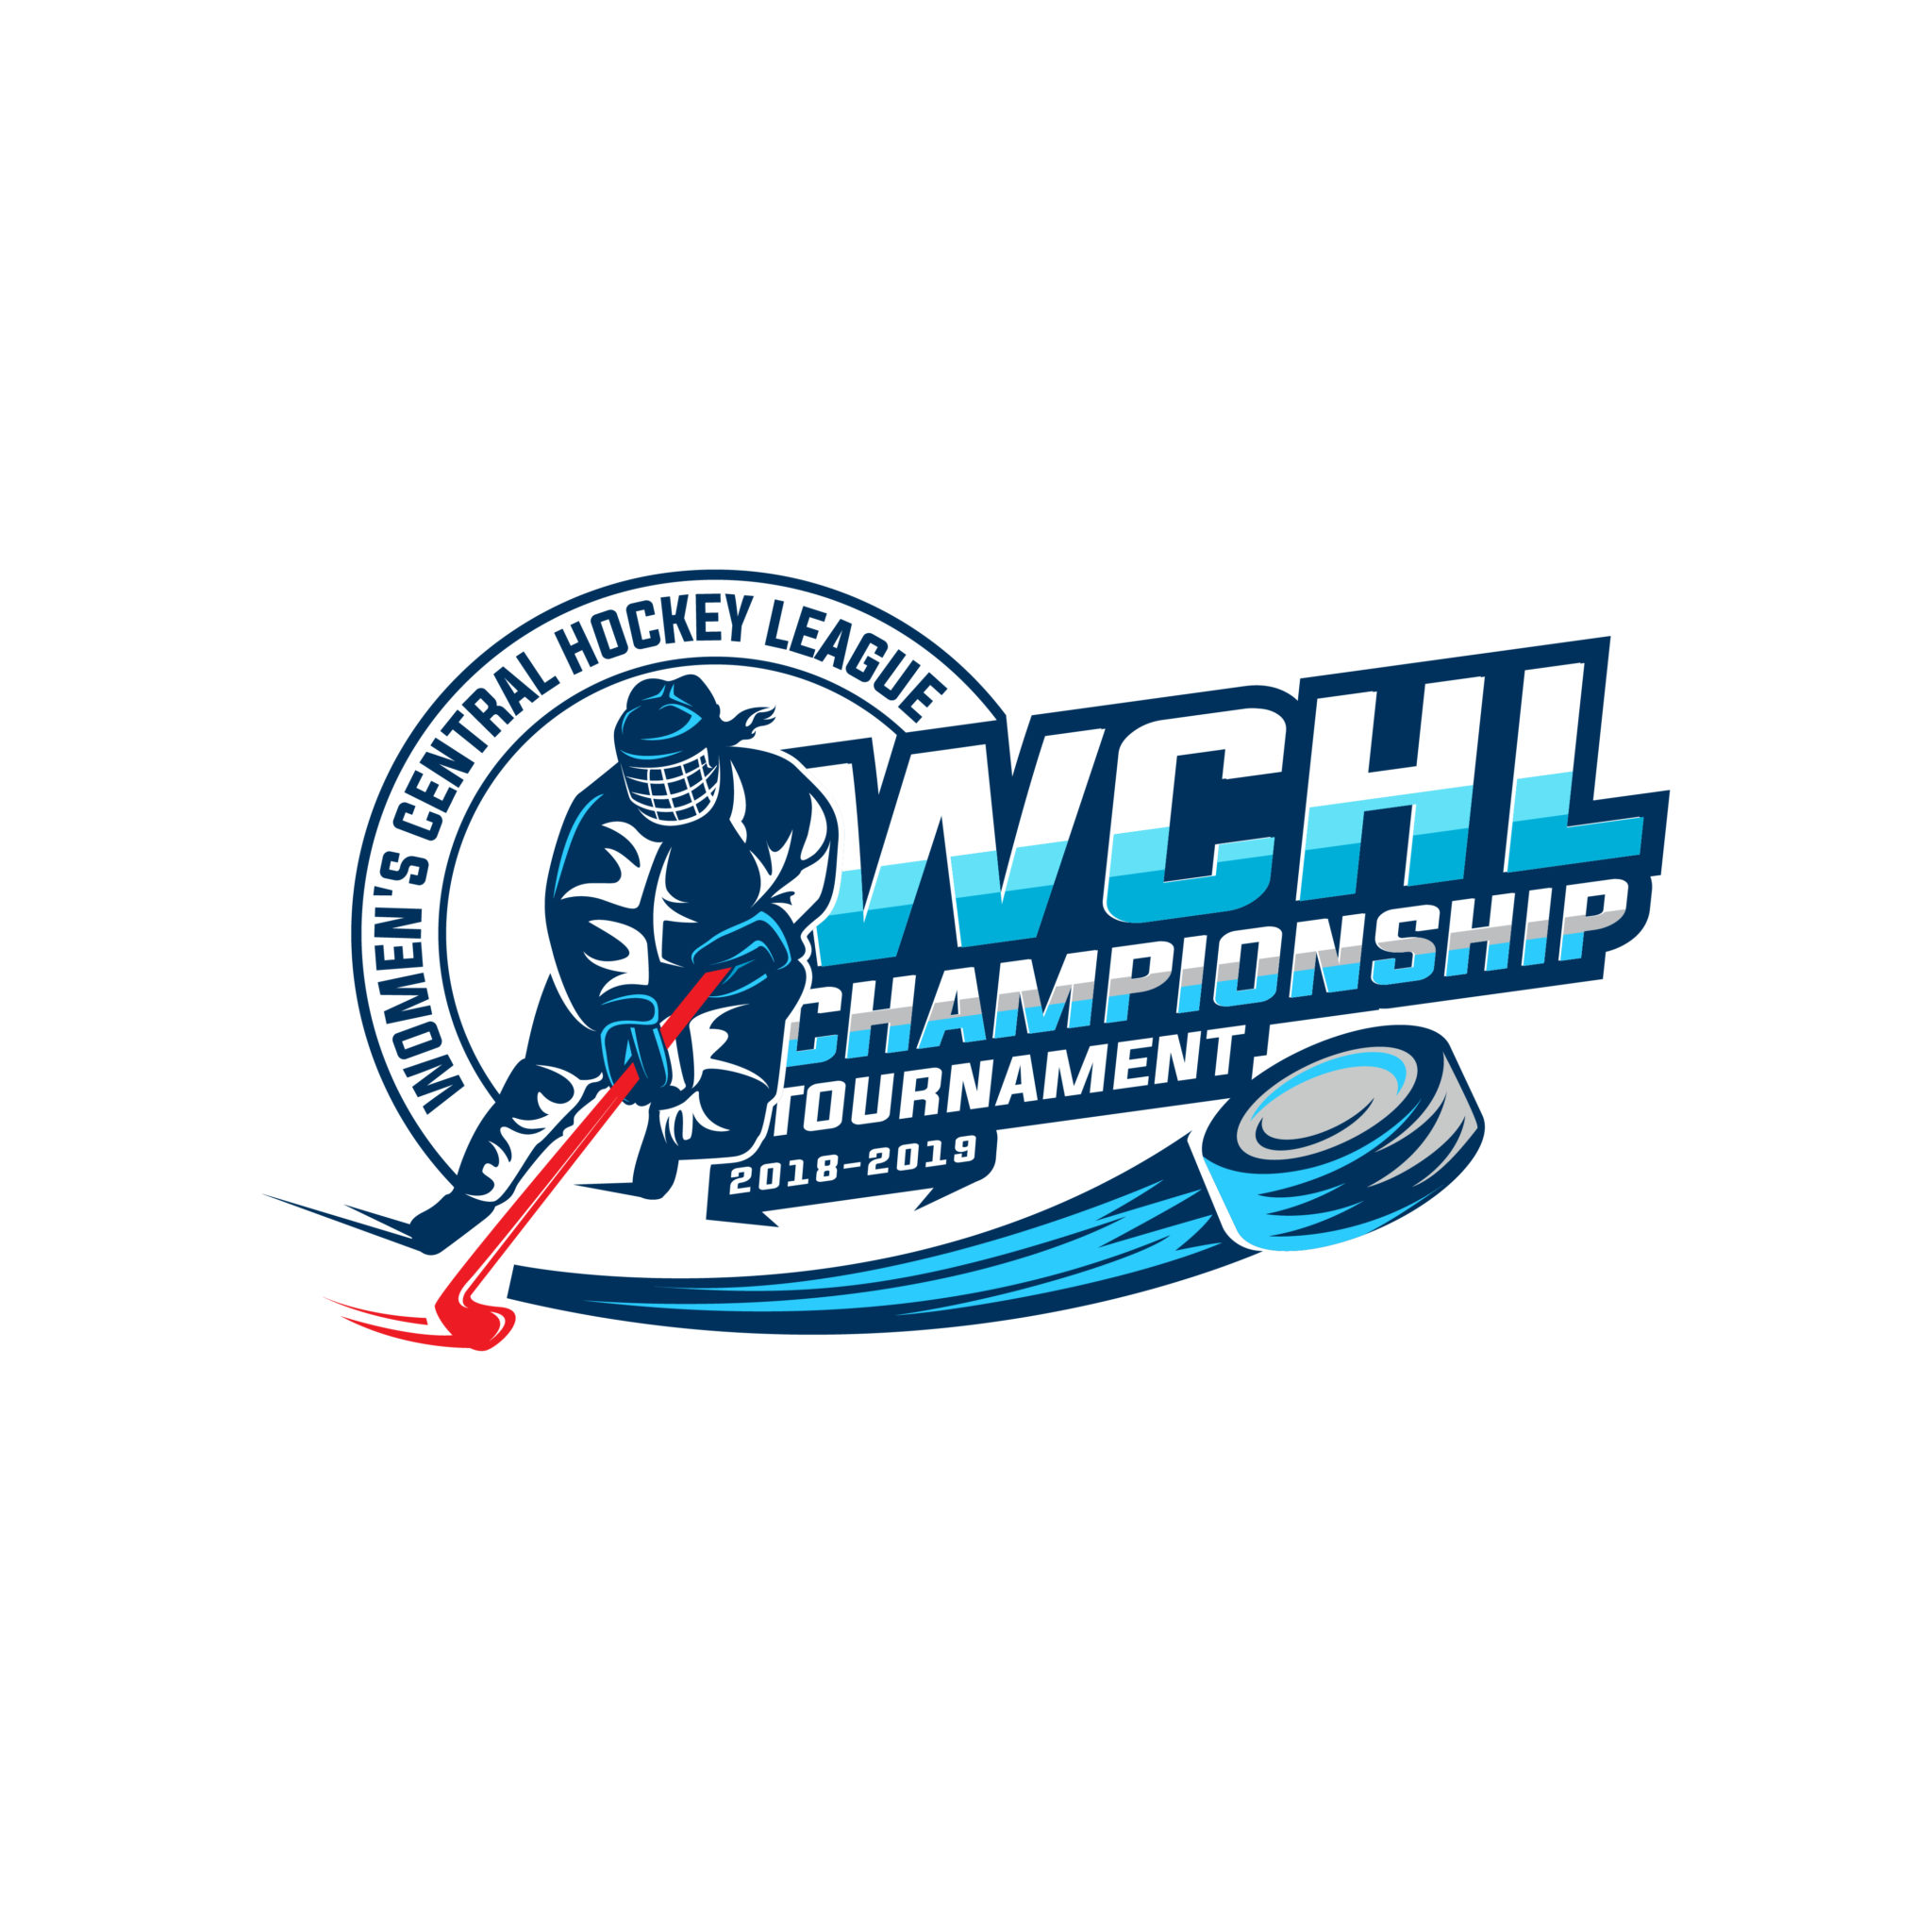 Emblem Logo Designs for Championship tournament